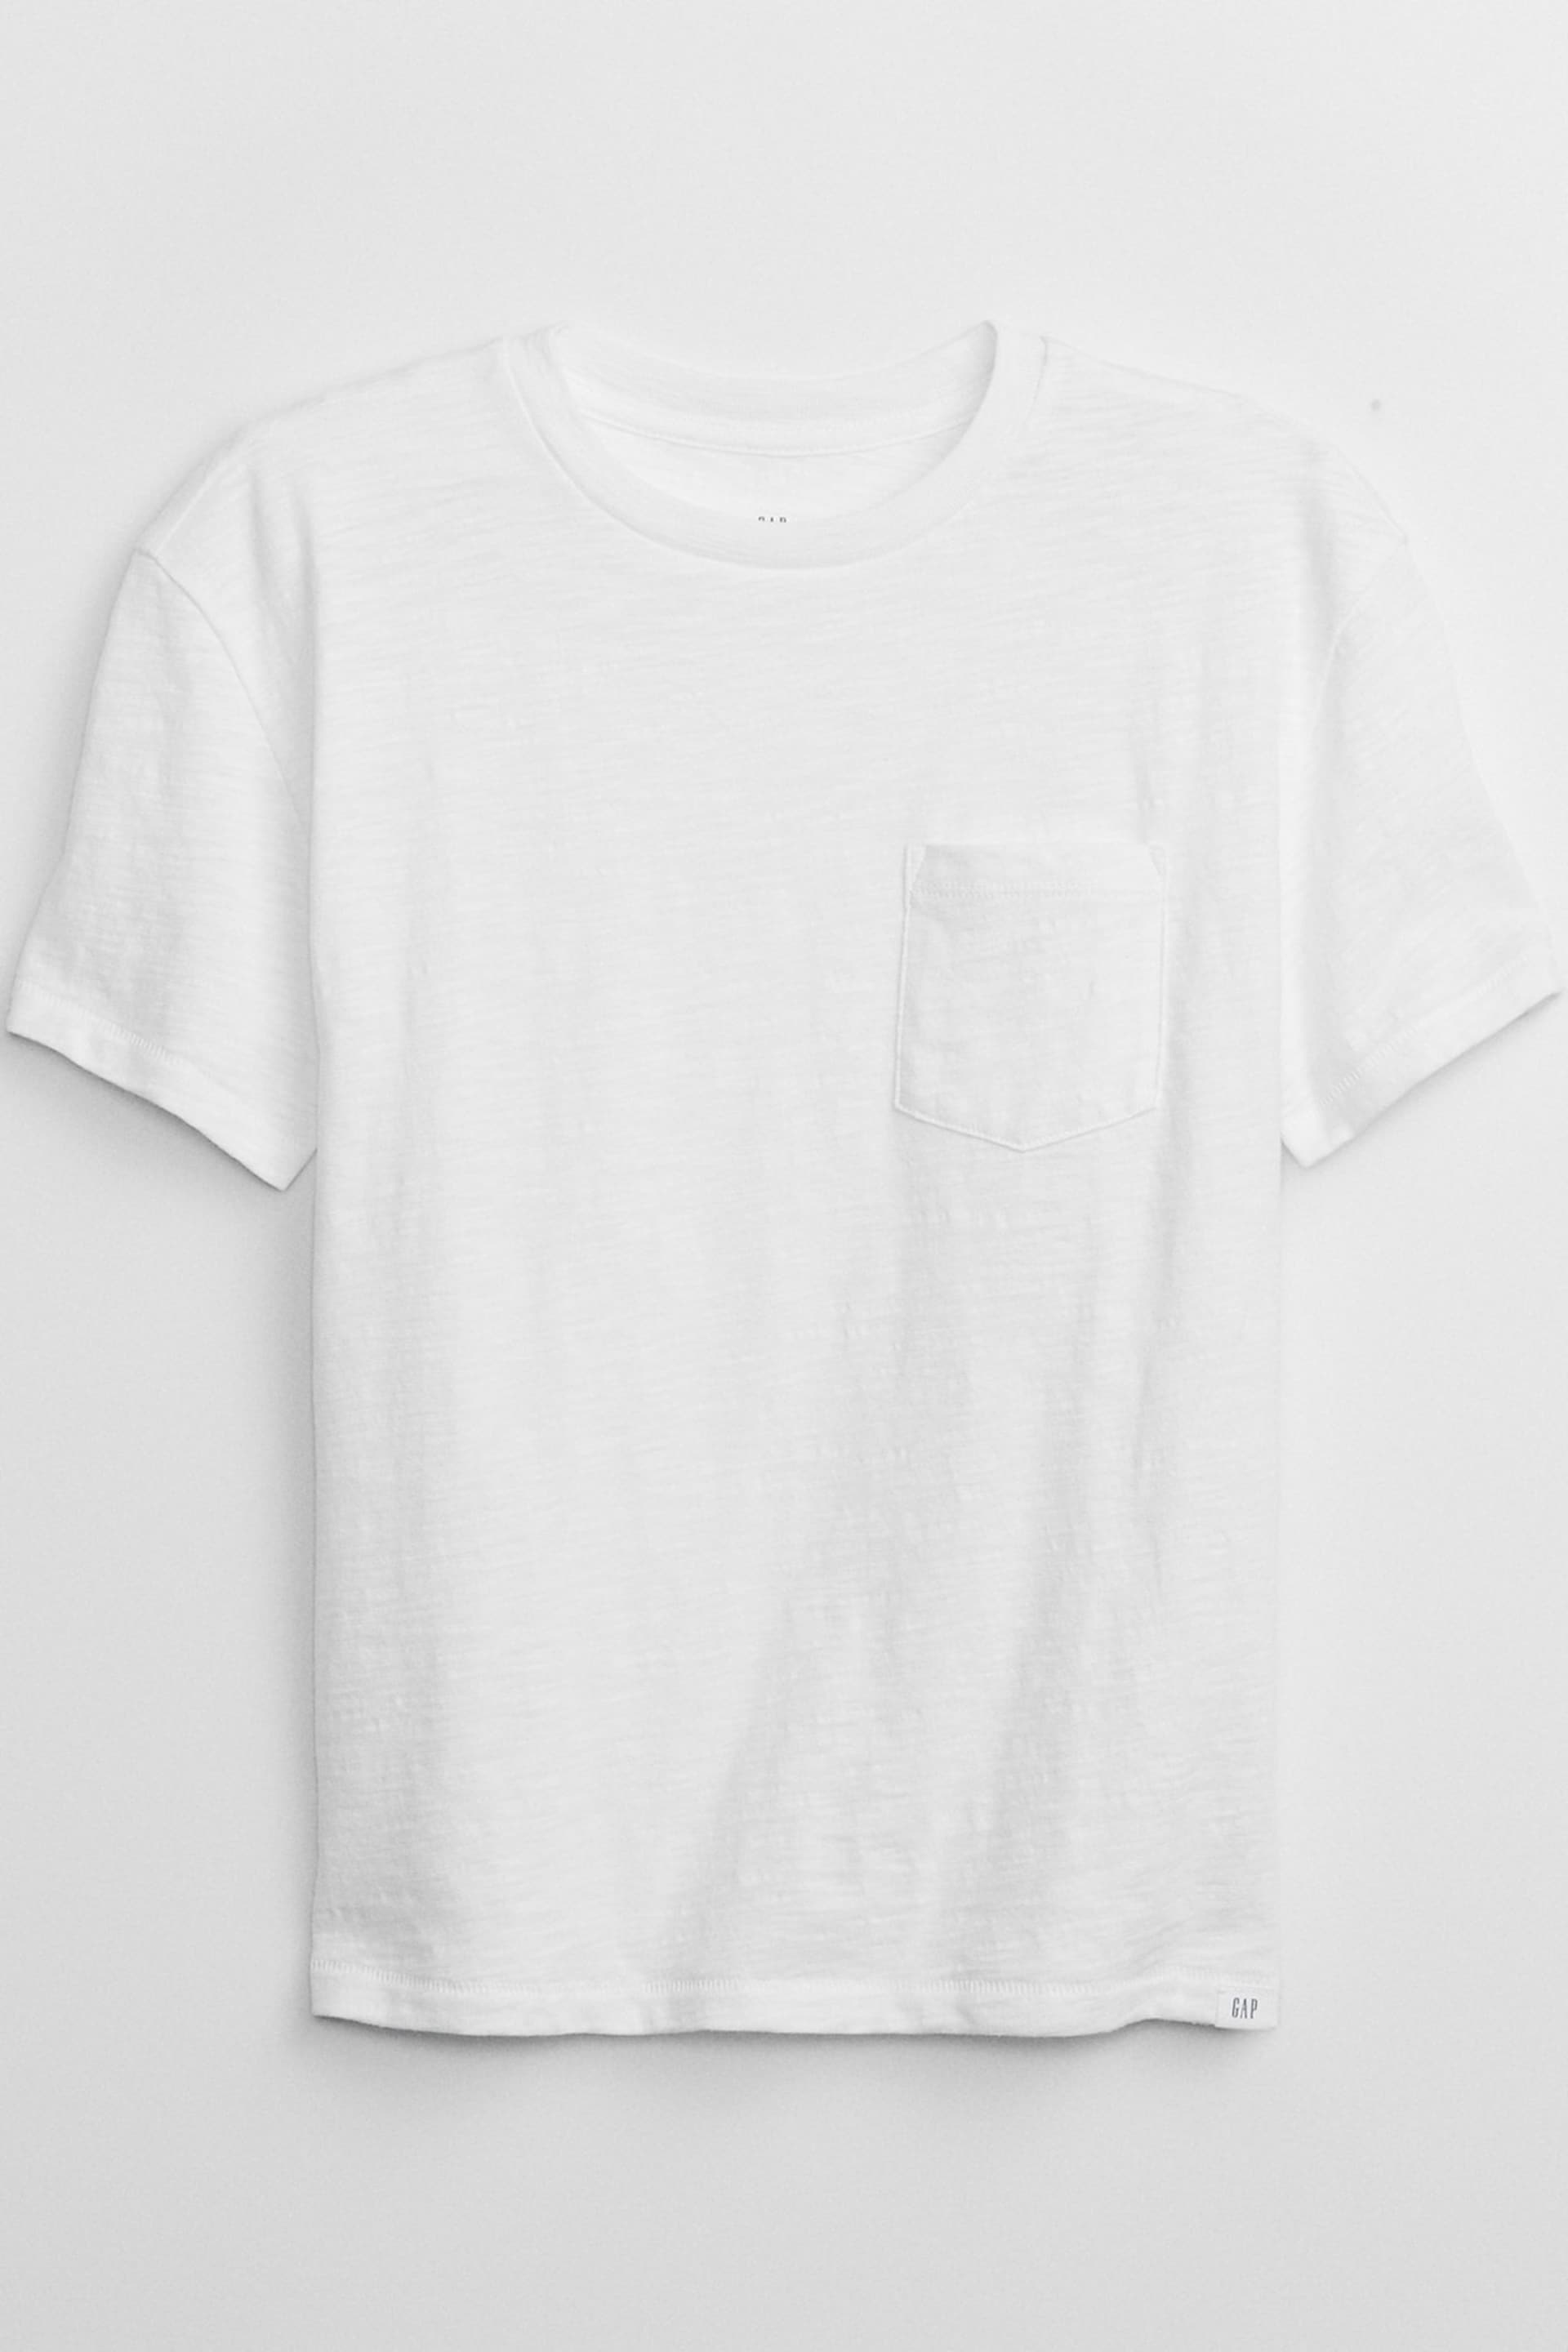 Gap White Pocket Short Sleeve Crew Neck T-Shirt (4-13yrs) - Image 1 of 3